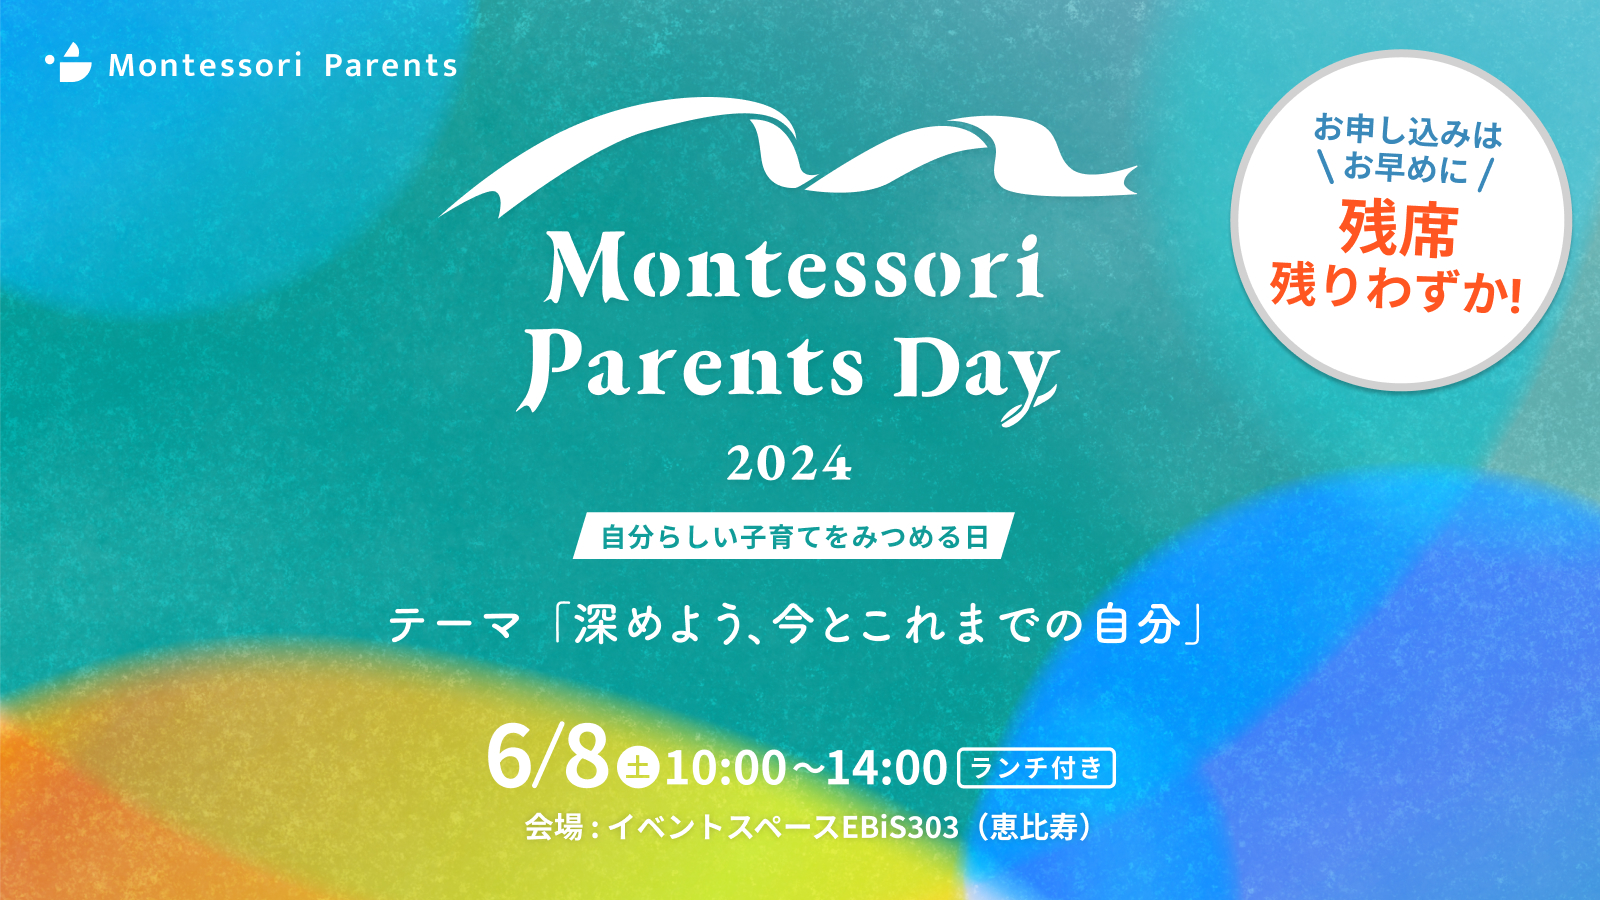 Montessori Parents Day 2024